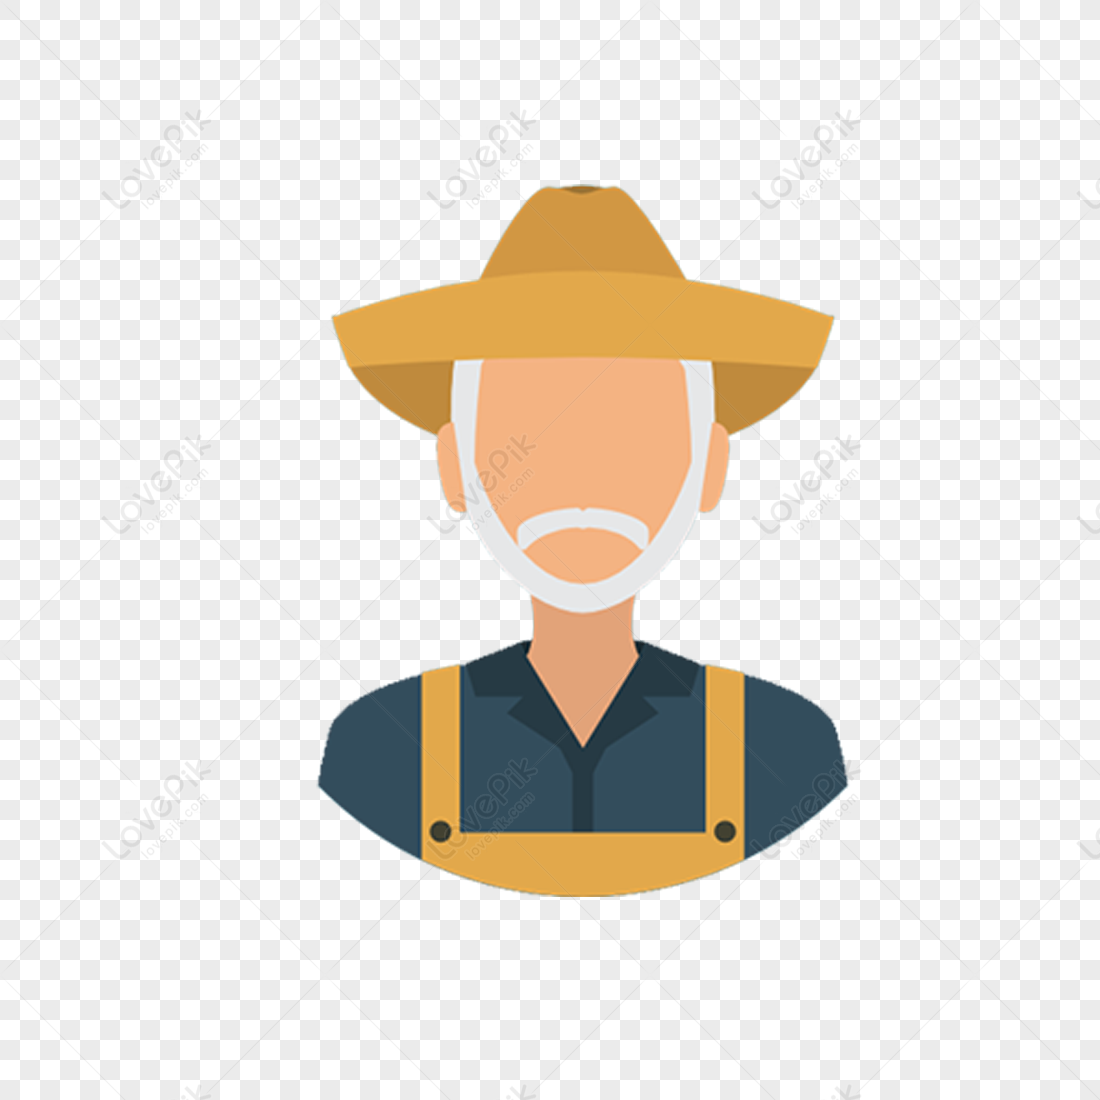 A Farmer, Farmer Man, Farmer Hat, Farm Farmer PNG Hd Transparent Image ...